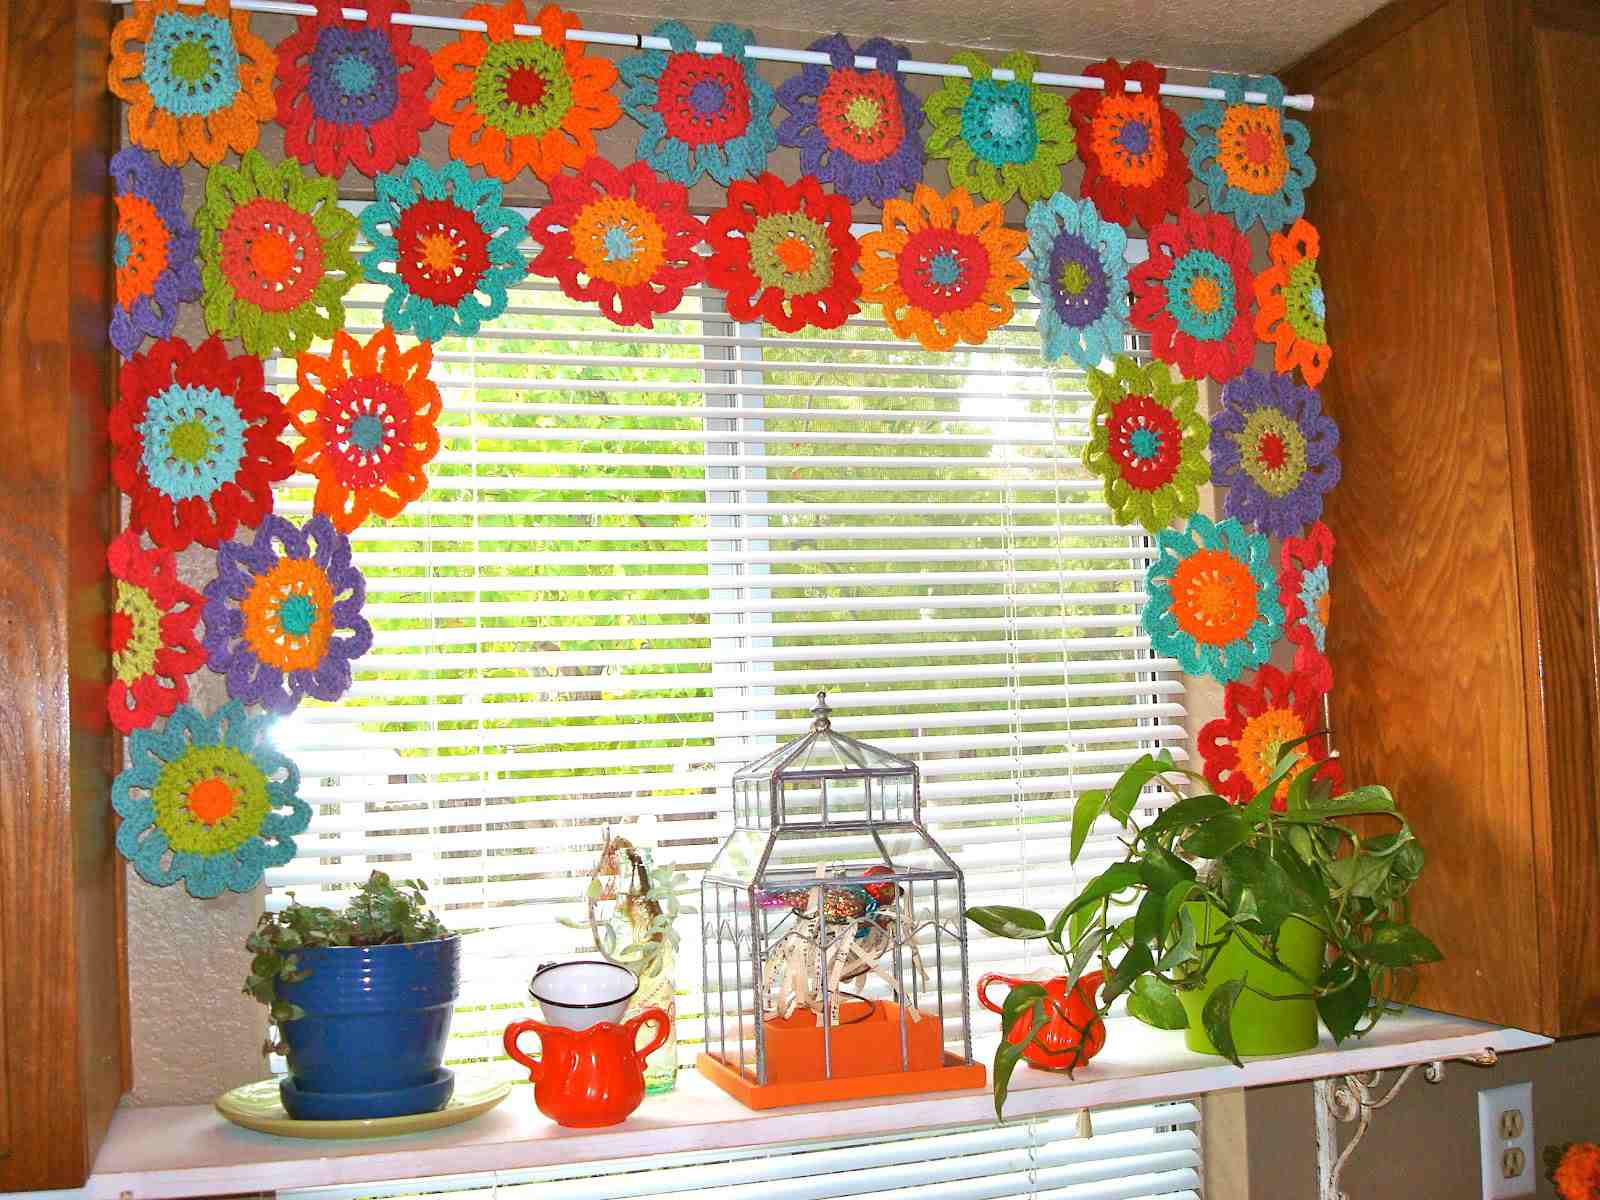 Crochet Curtain Patterns 8 Free Crochet Curtain Patterns